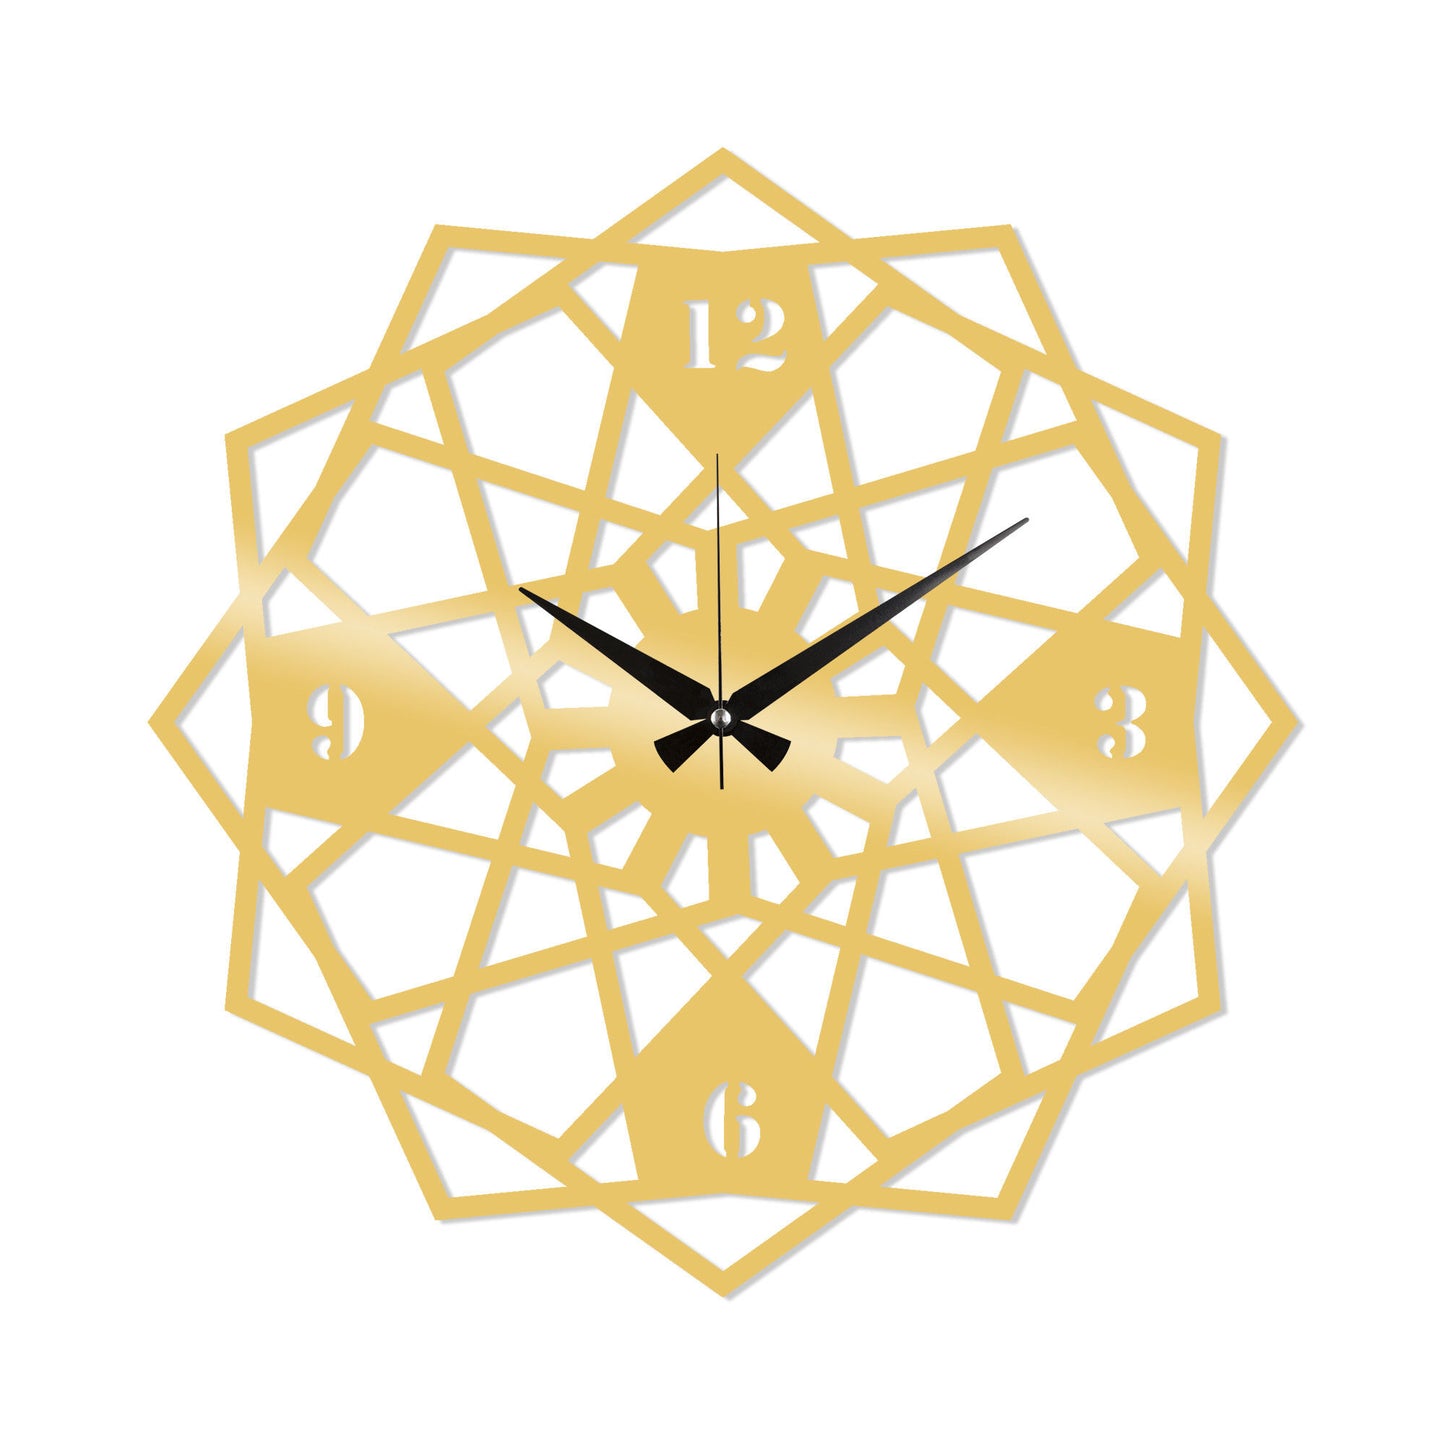 Metal Wall Clock 27 - Gold - Decorative Metal Wall Clock